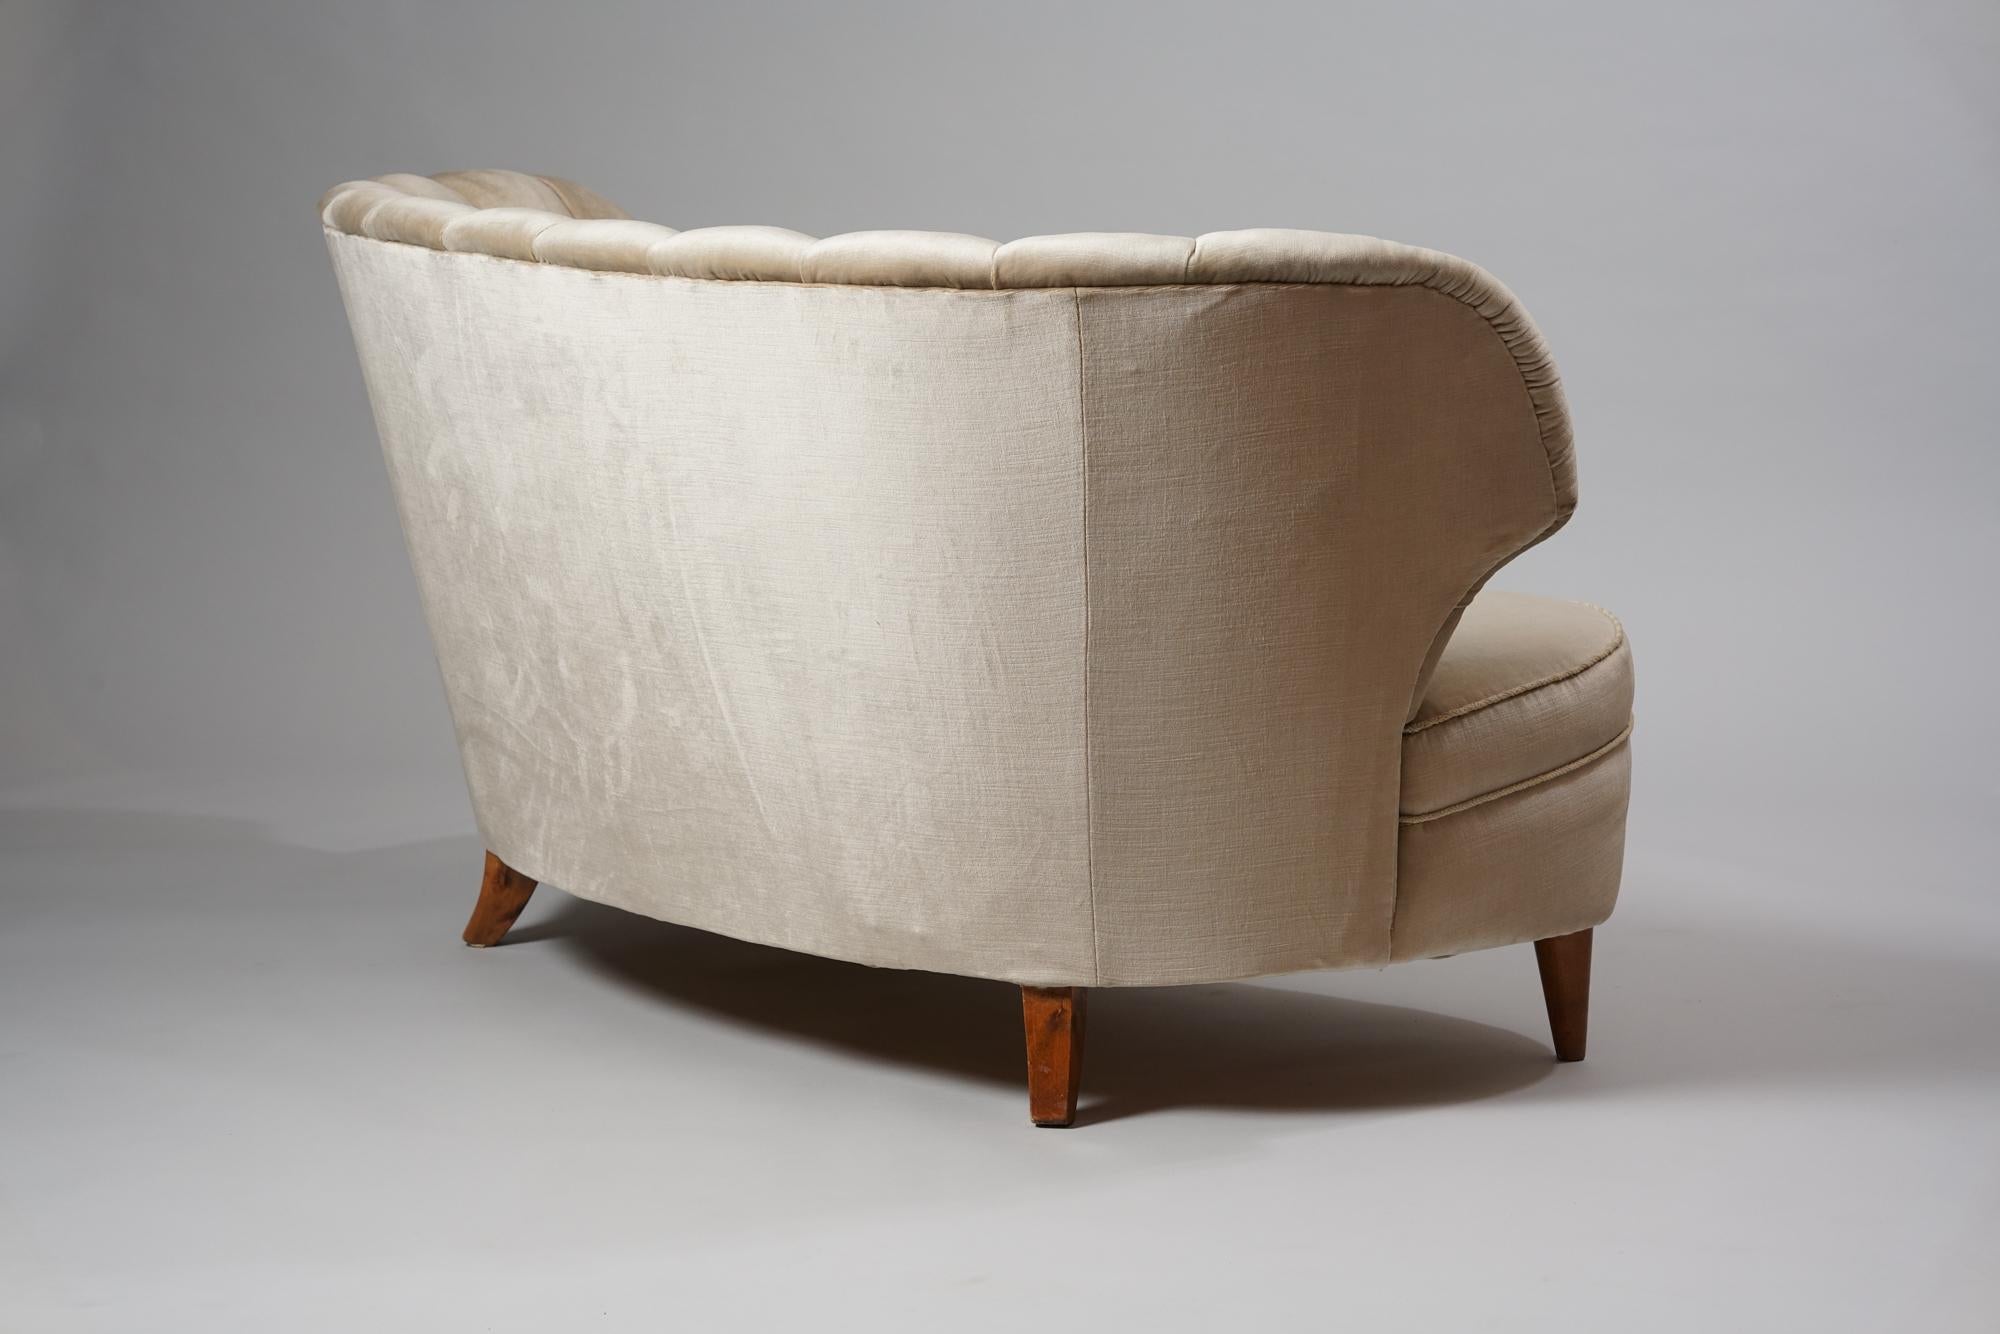 Curved Finnish Sofa, Carl-Johan Boman, 1940s For Sale 1